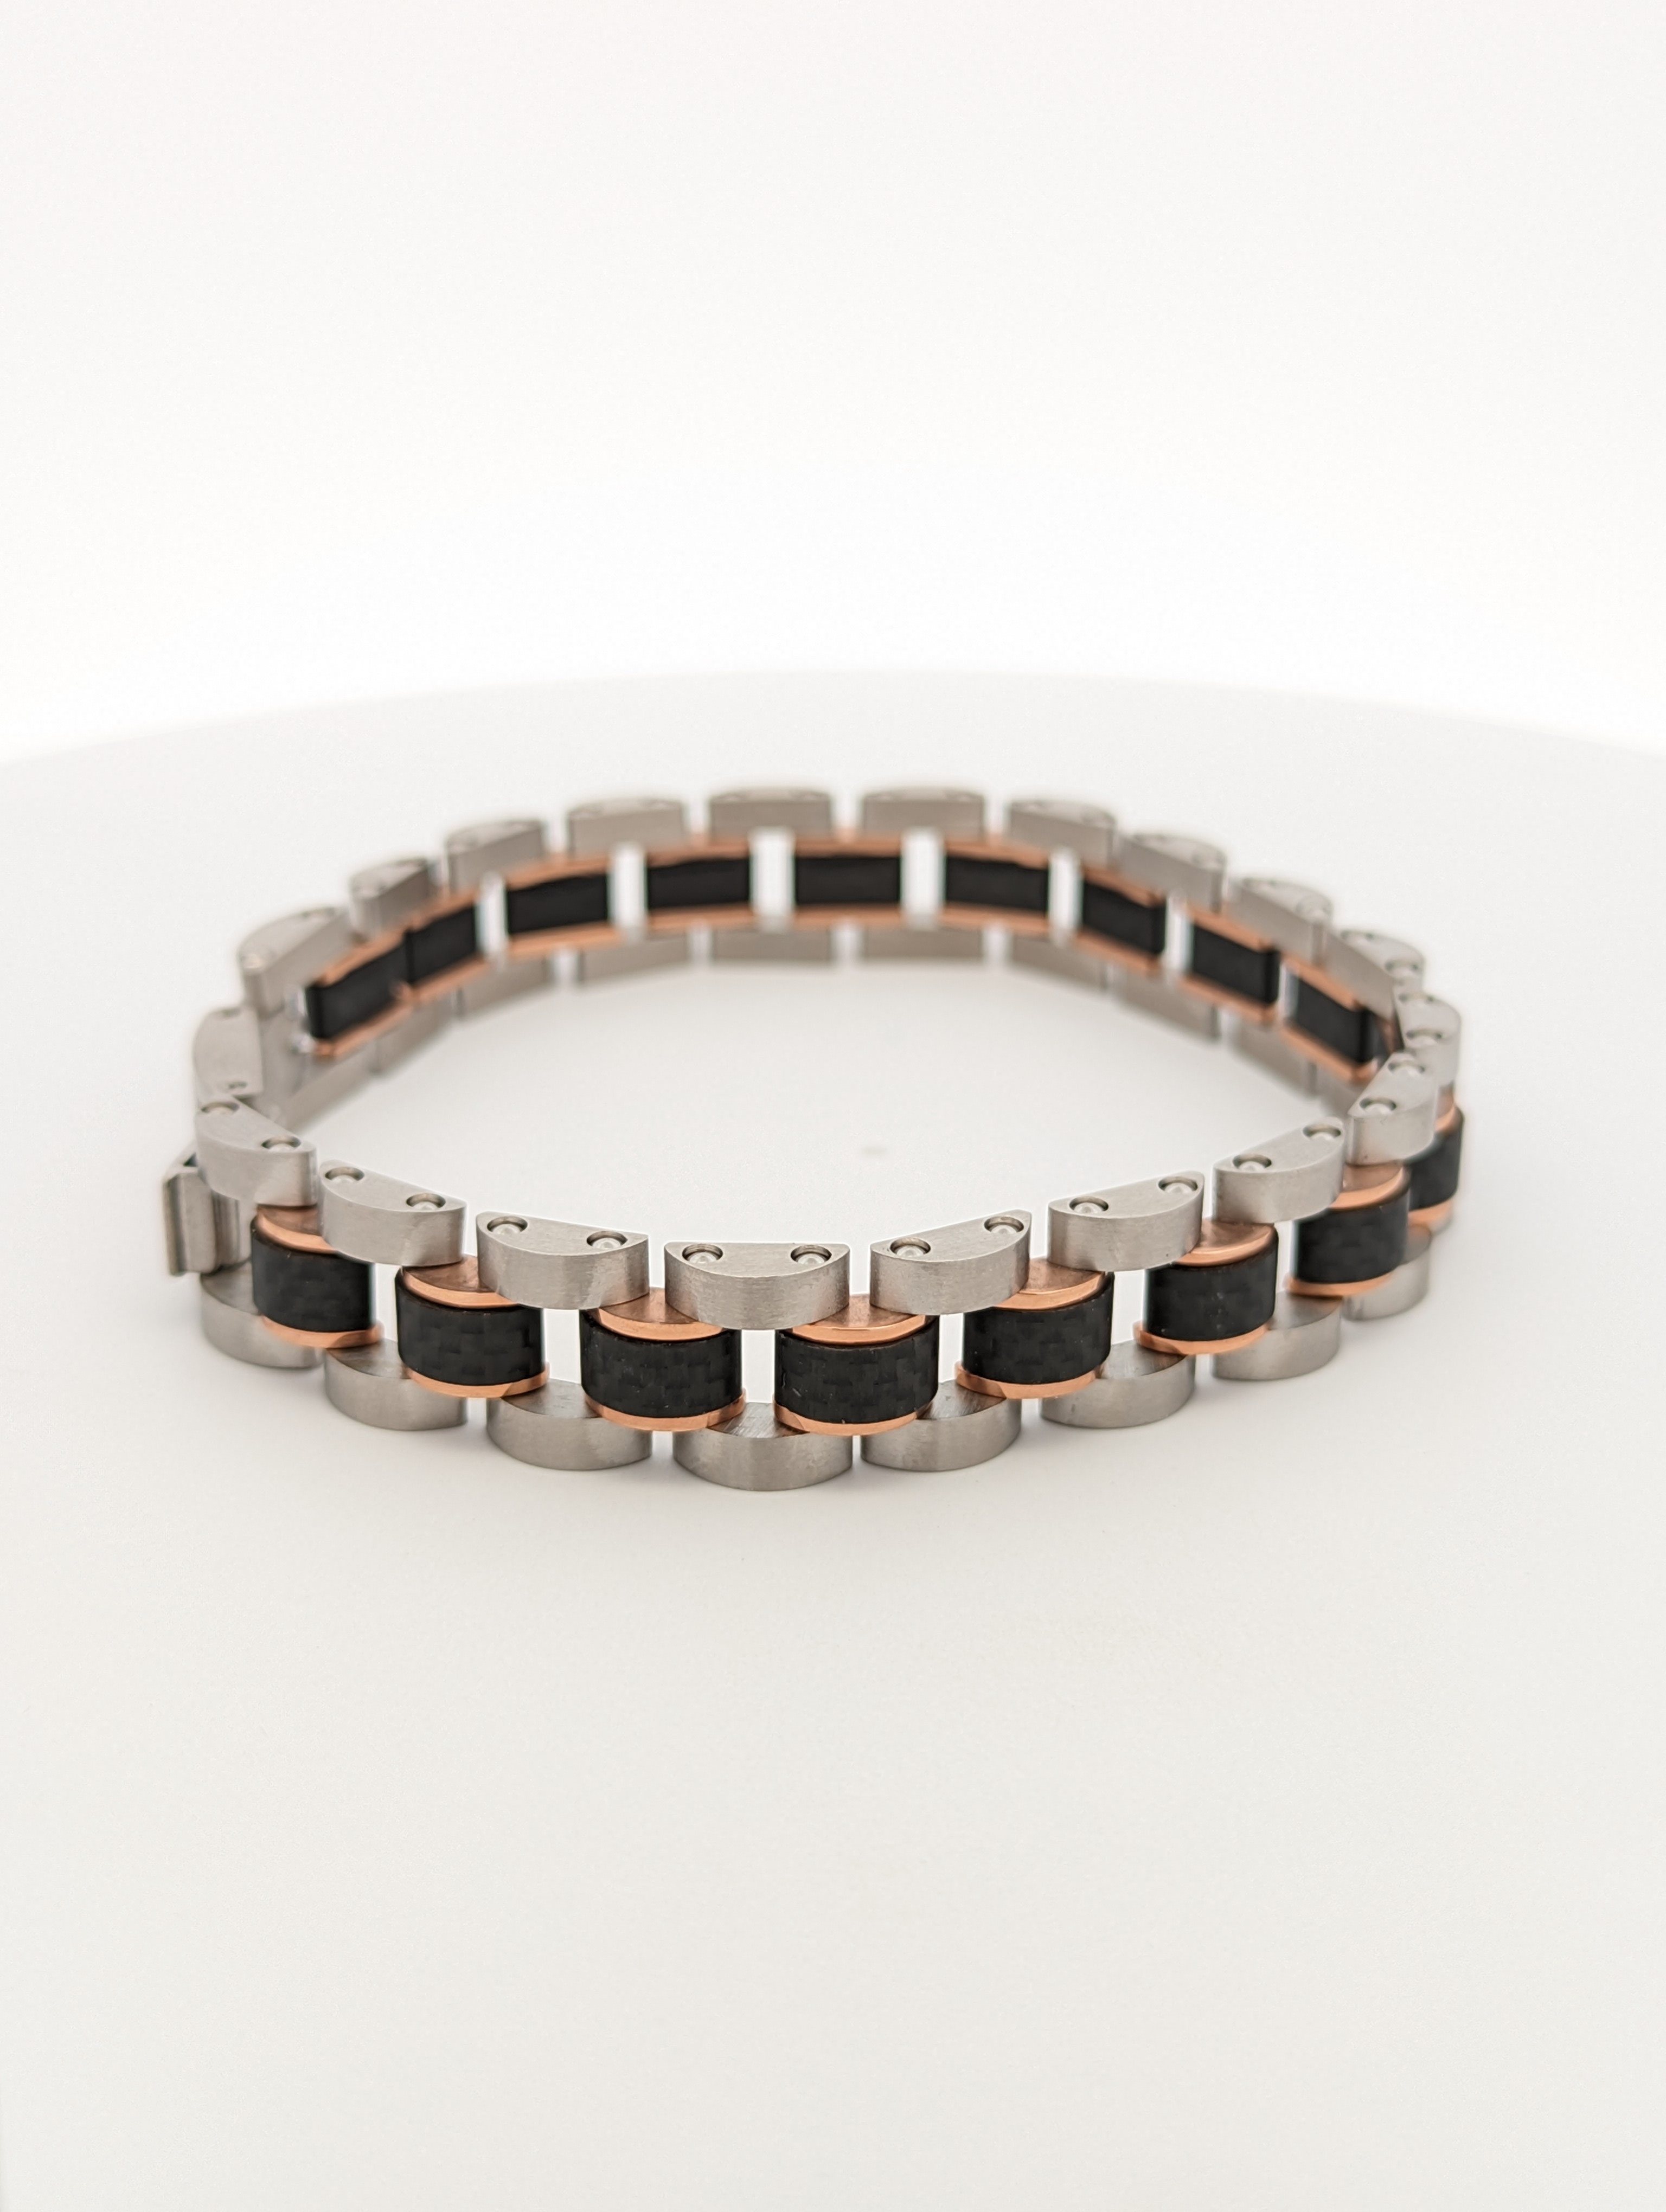 Amazing Tips for Choosing the Right Bracelet to Complement Your Style ||Golden Elegance men's bracelet ||